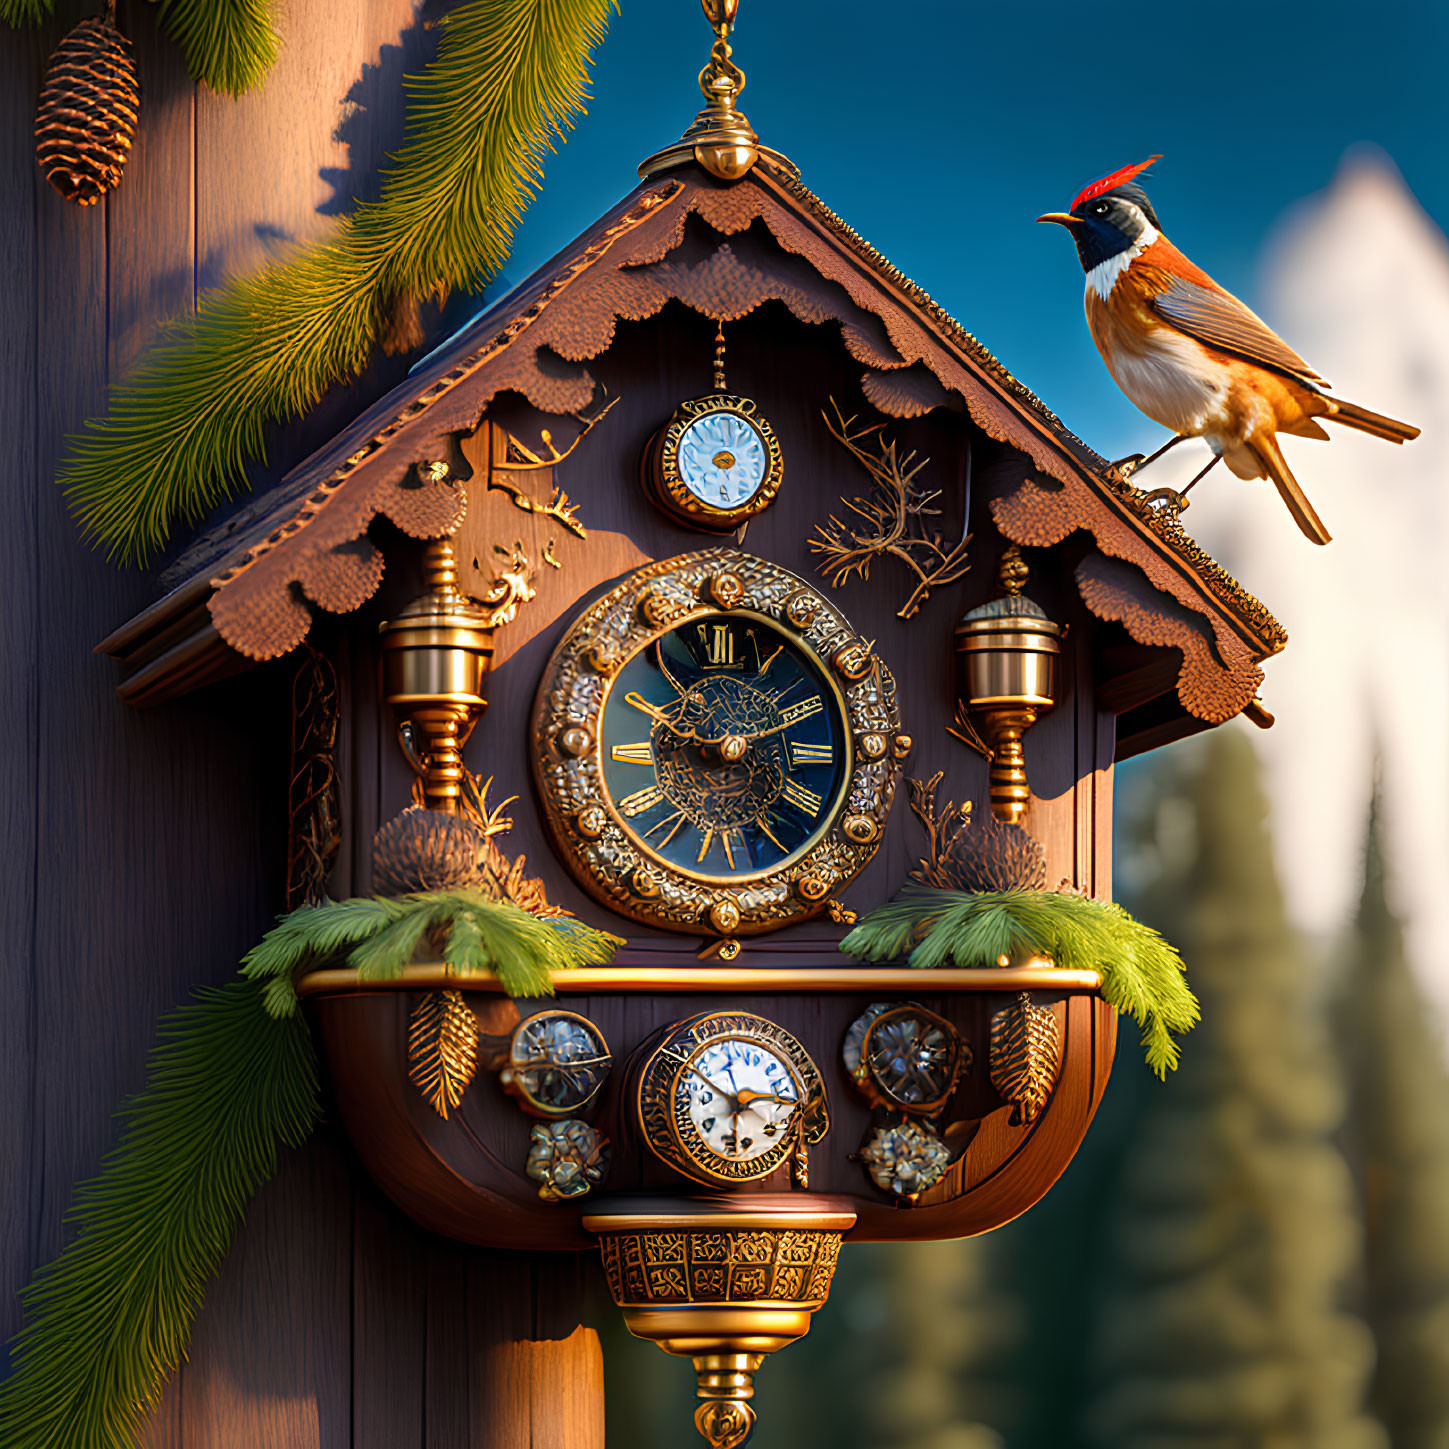 Intricate Cuckoo Clock with Bird, Mountains & Evergreens